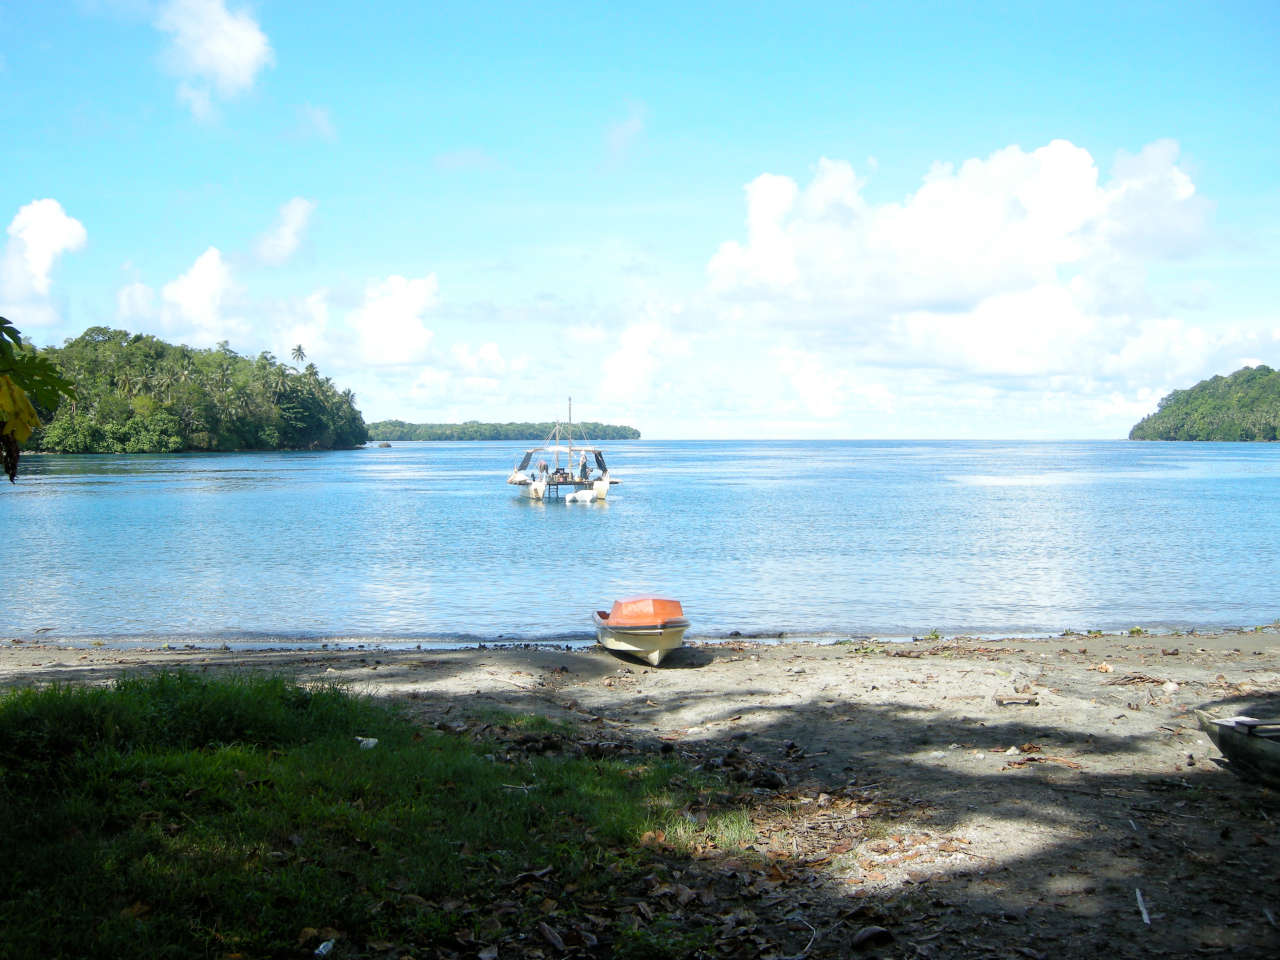 Lapita Tikopia anchored in a bay